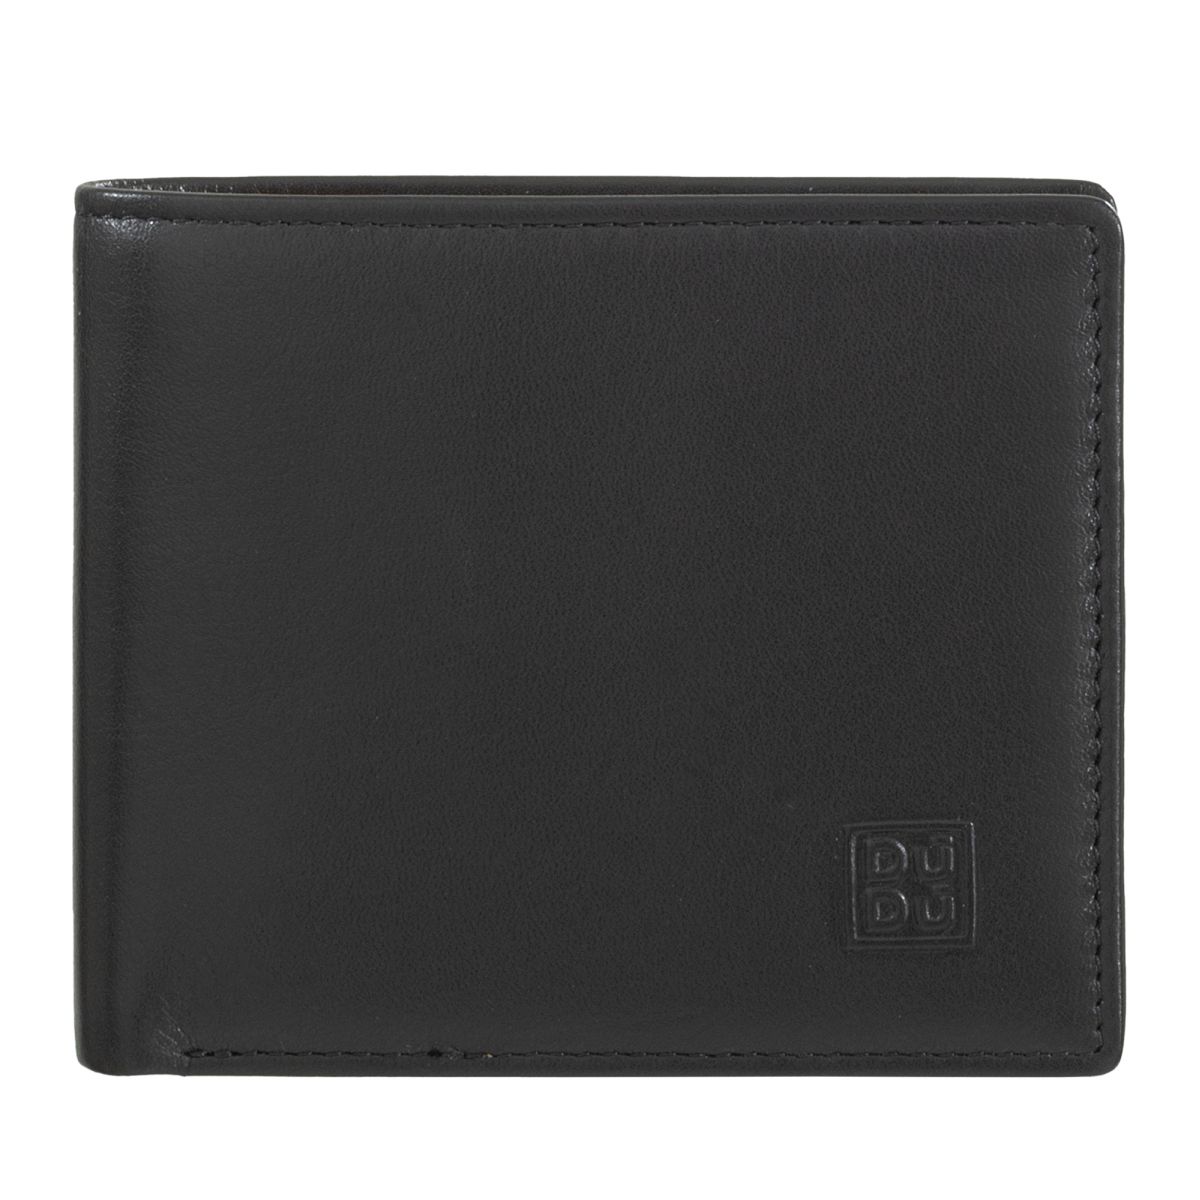 DuDu Mans genuine leather wallet - Black